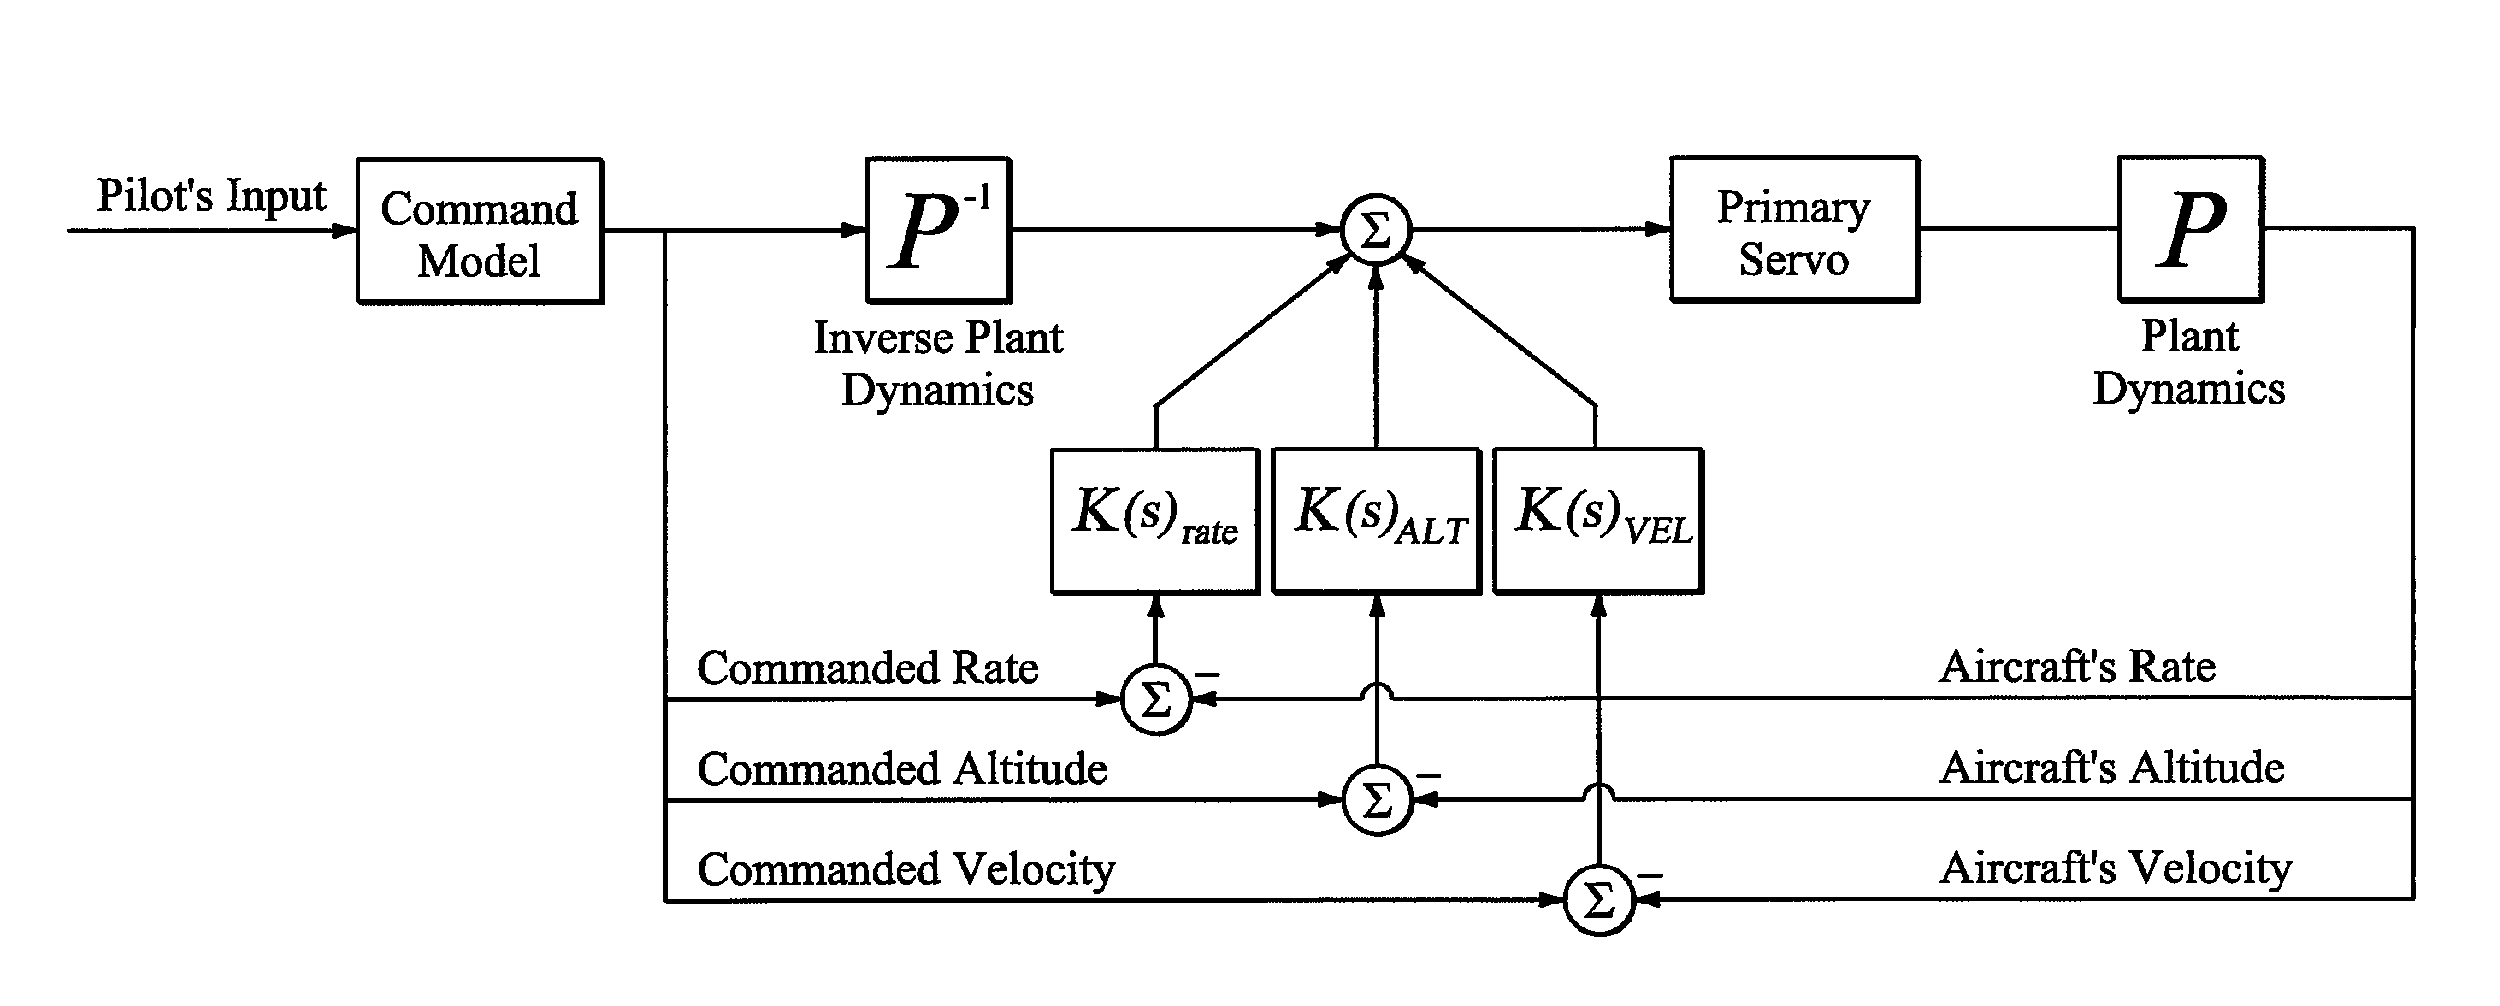 External load inverse plant